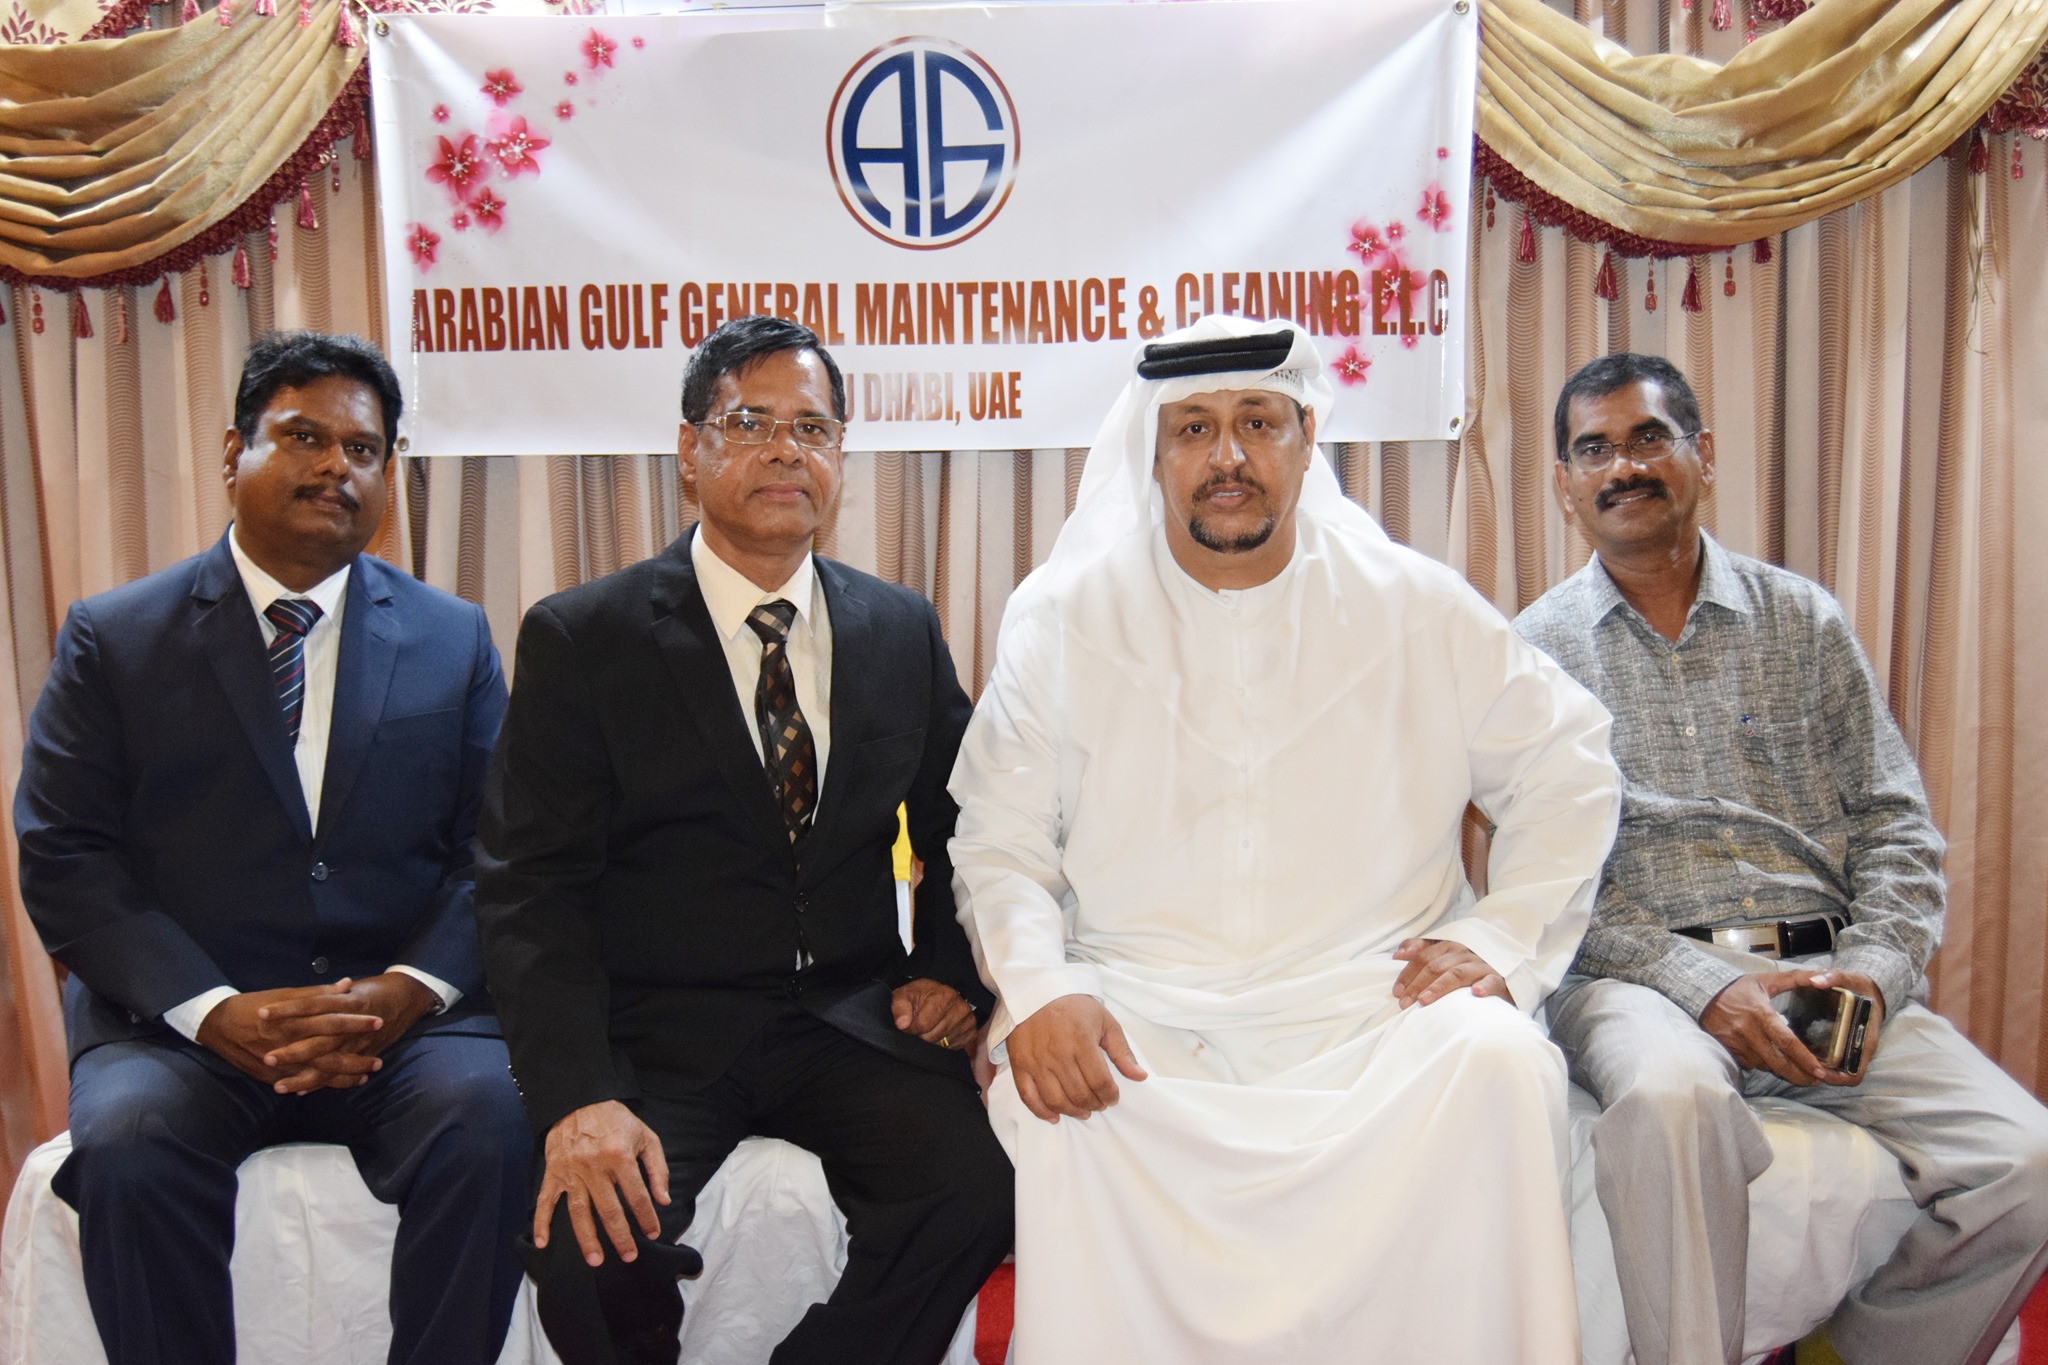 Arabian Gulf General Maintenance & Cleaning